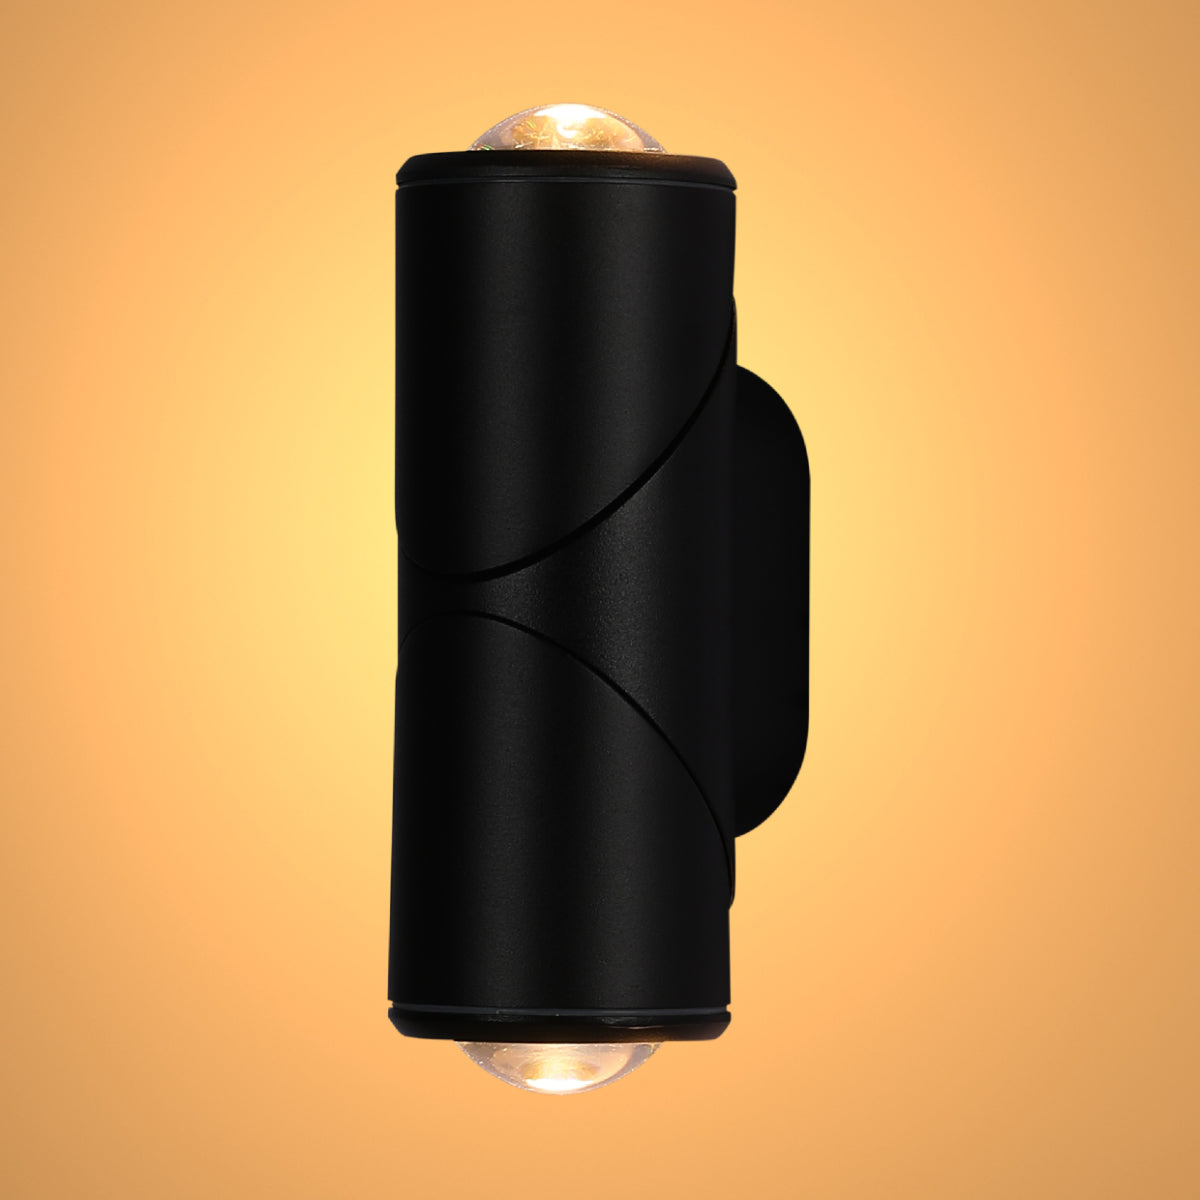 Main image of Rotatable Cylinders  Outdoor LED Wall Light Black 3000K Narrow Beam 182-034160